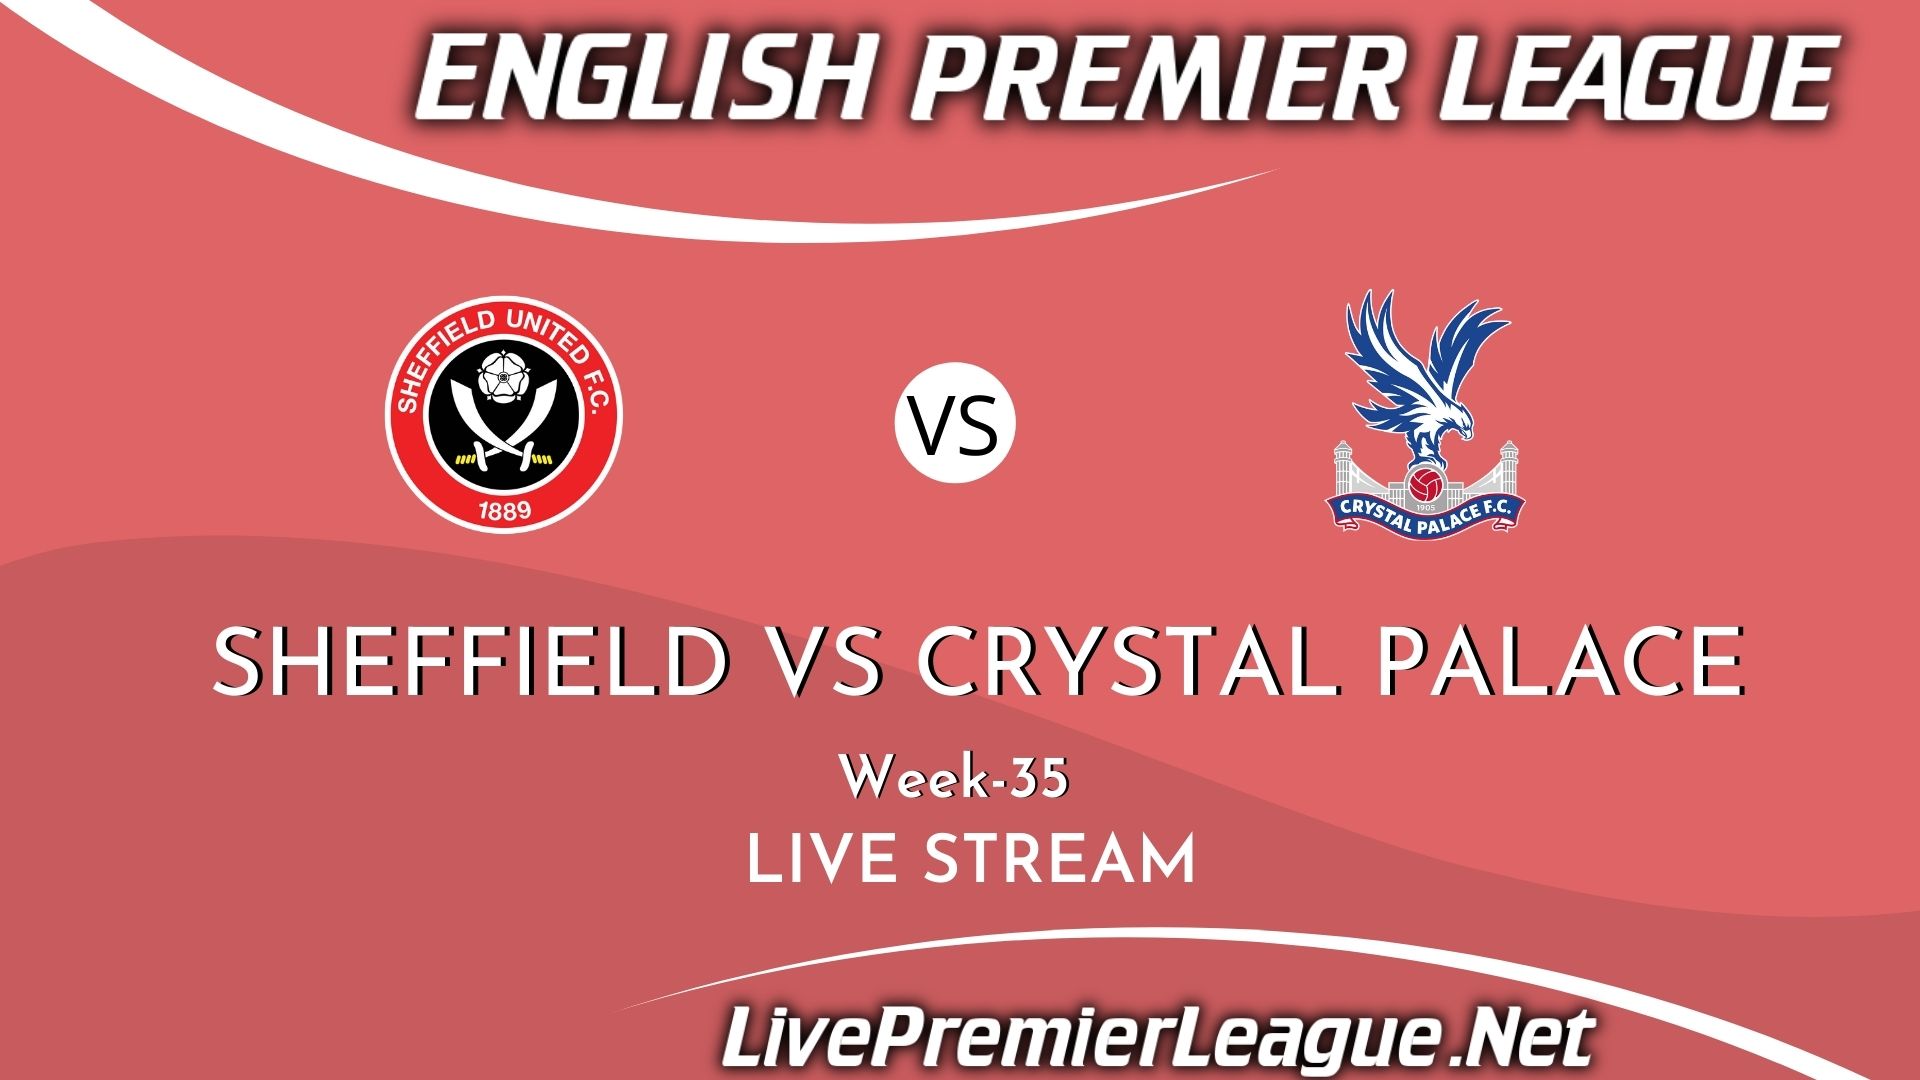 Sheffield United Vs Crystal Palace Live Stream 2021 | Premier League Week 35